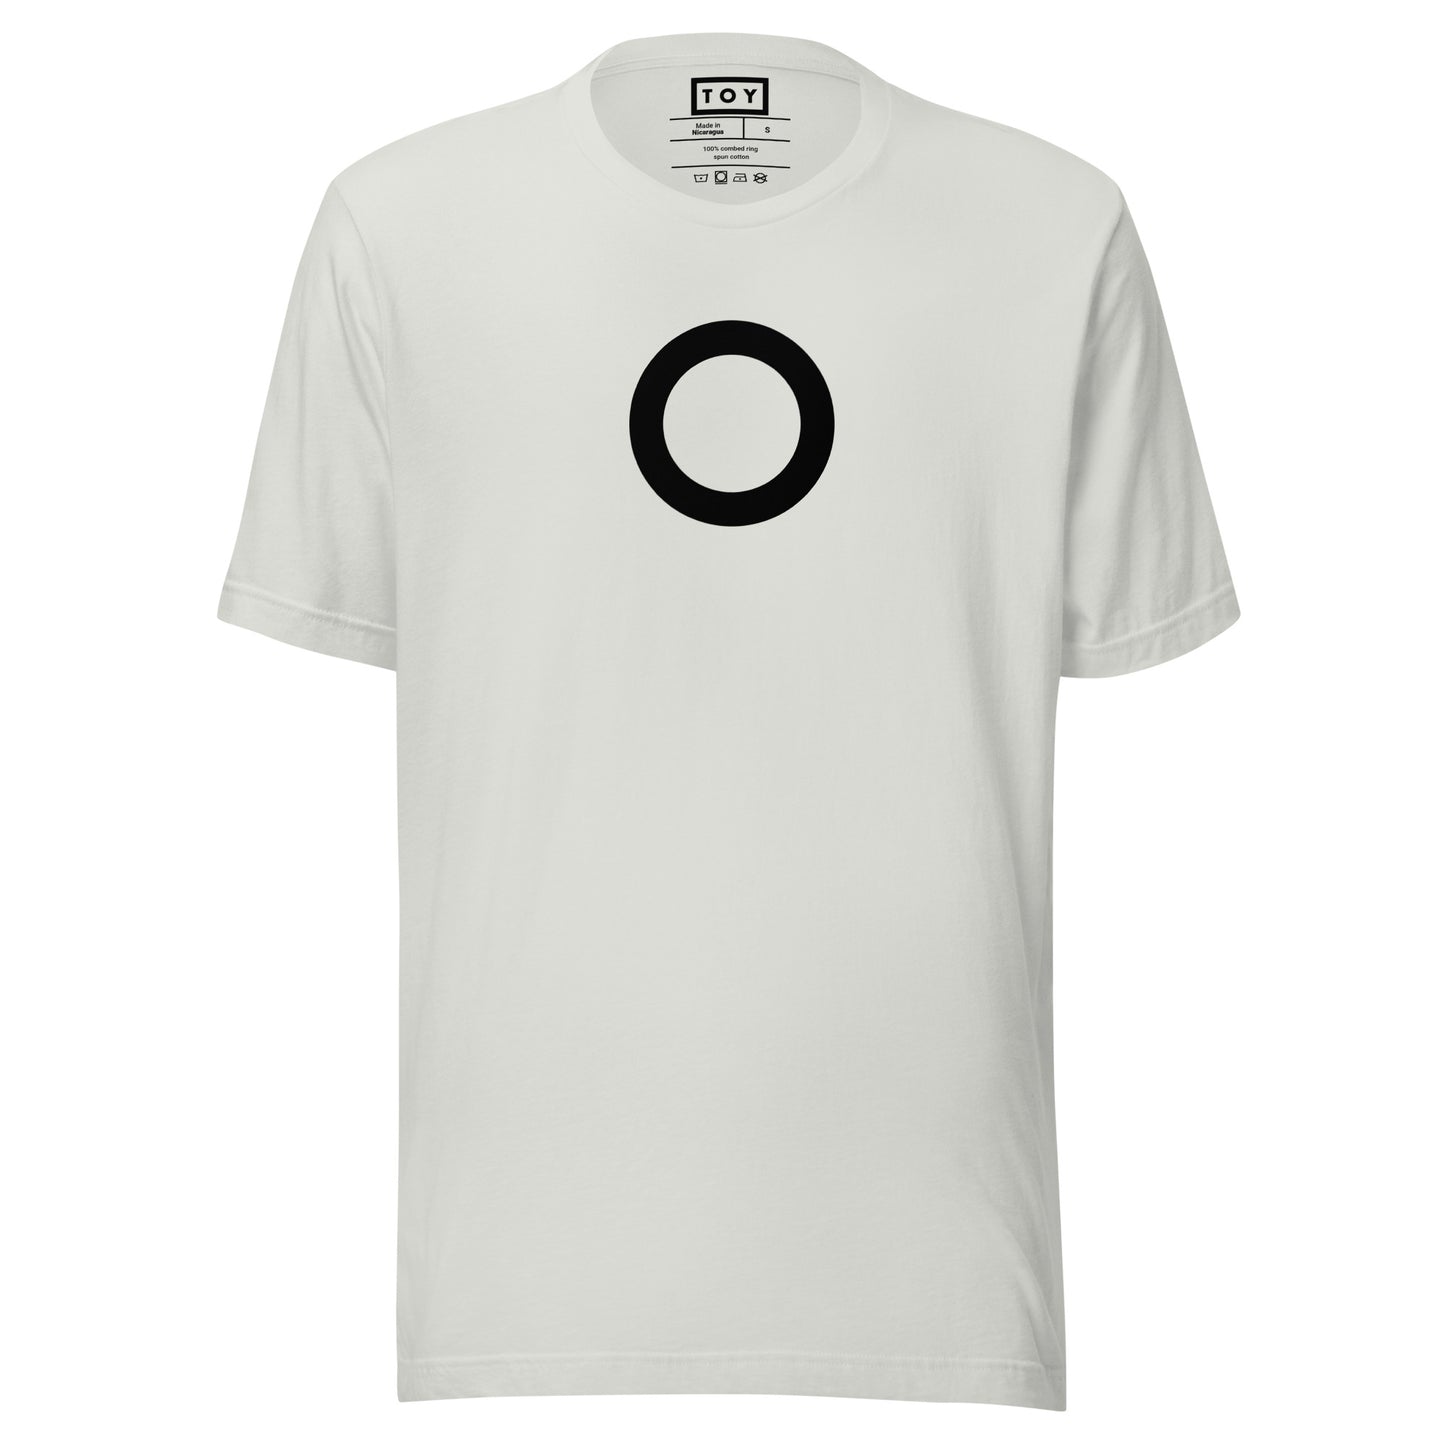 TOY [CIRCLE] Series (Blk) T-shirt